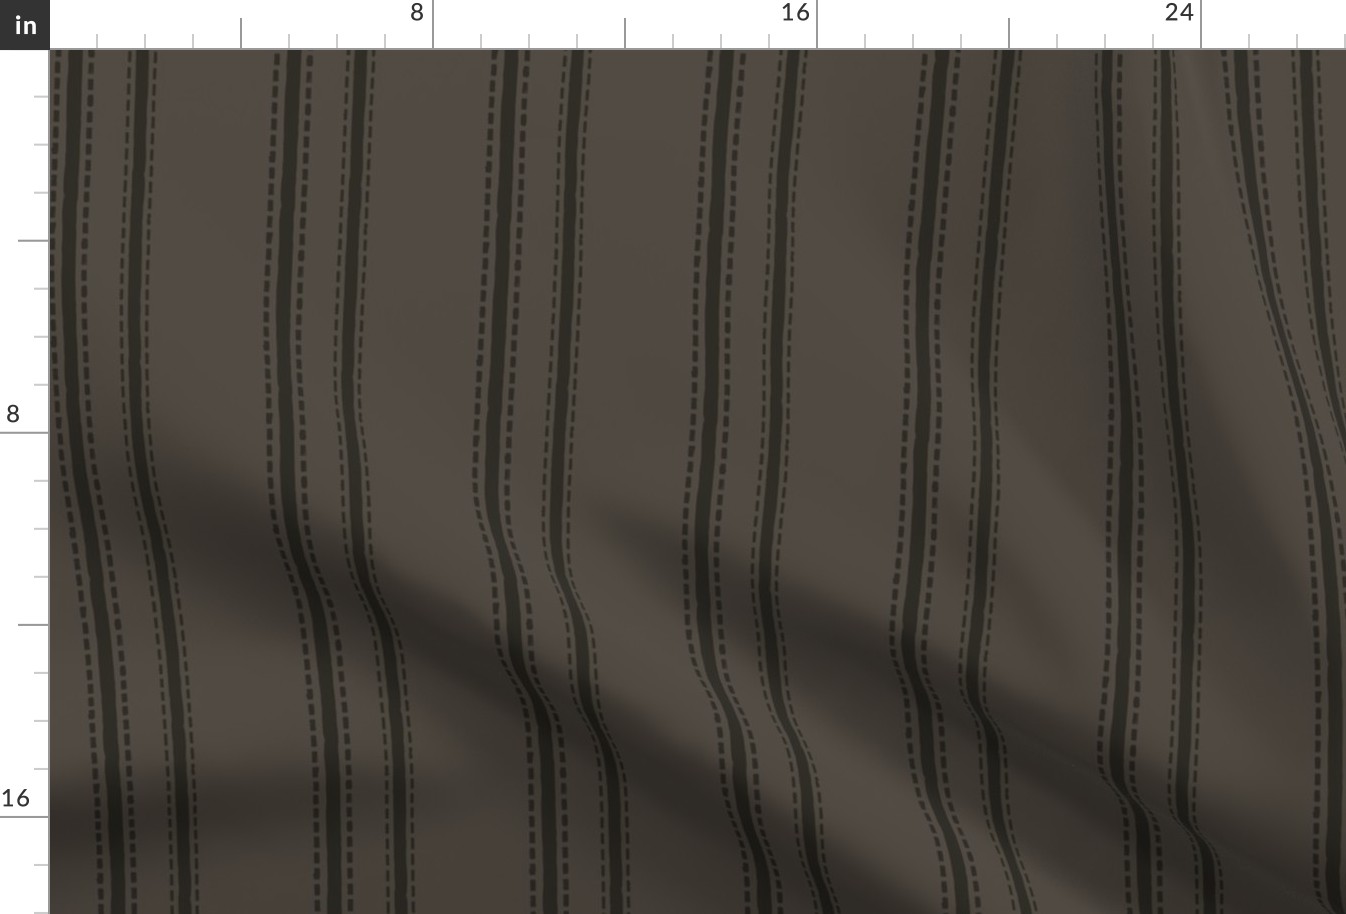 Kuba cloth blender stripes in dark brown and stone